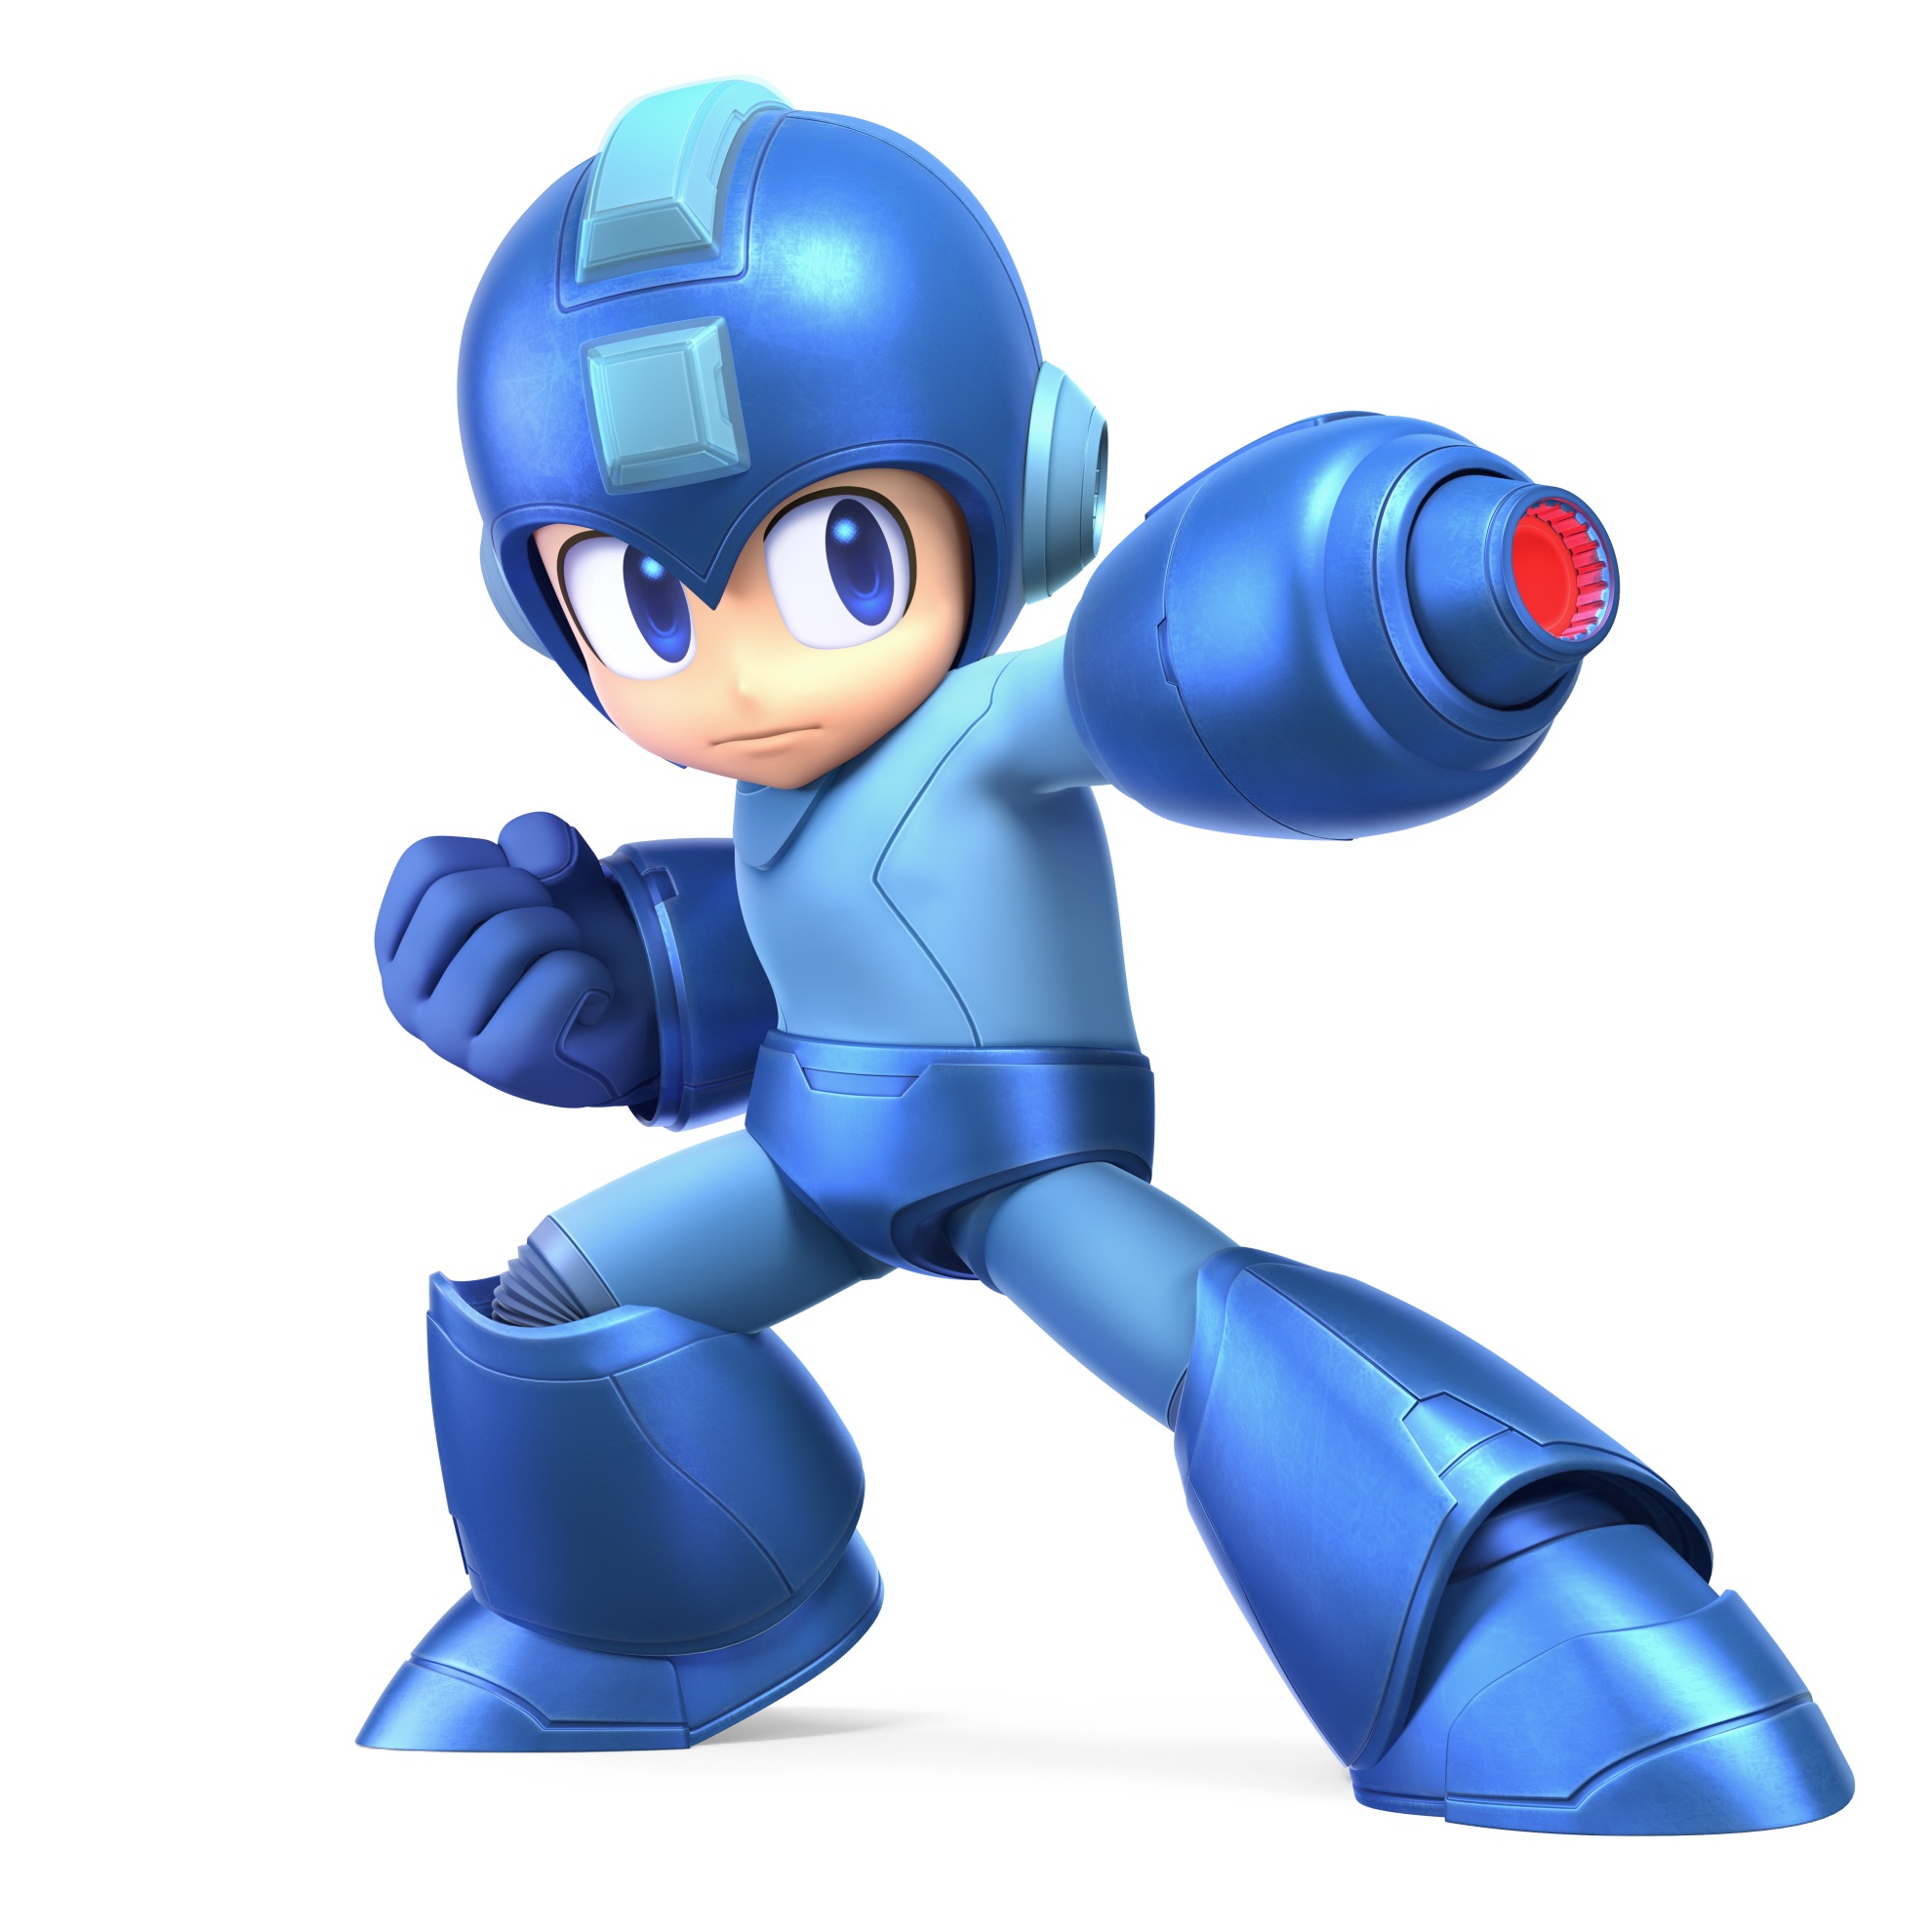 Mega Man Super Smash Bros. Ultimate Character Render